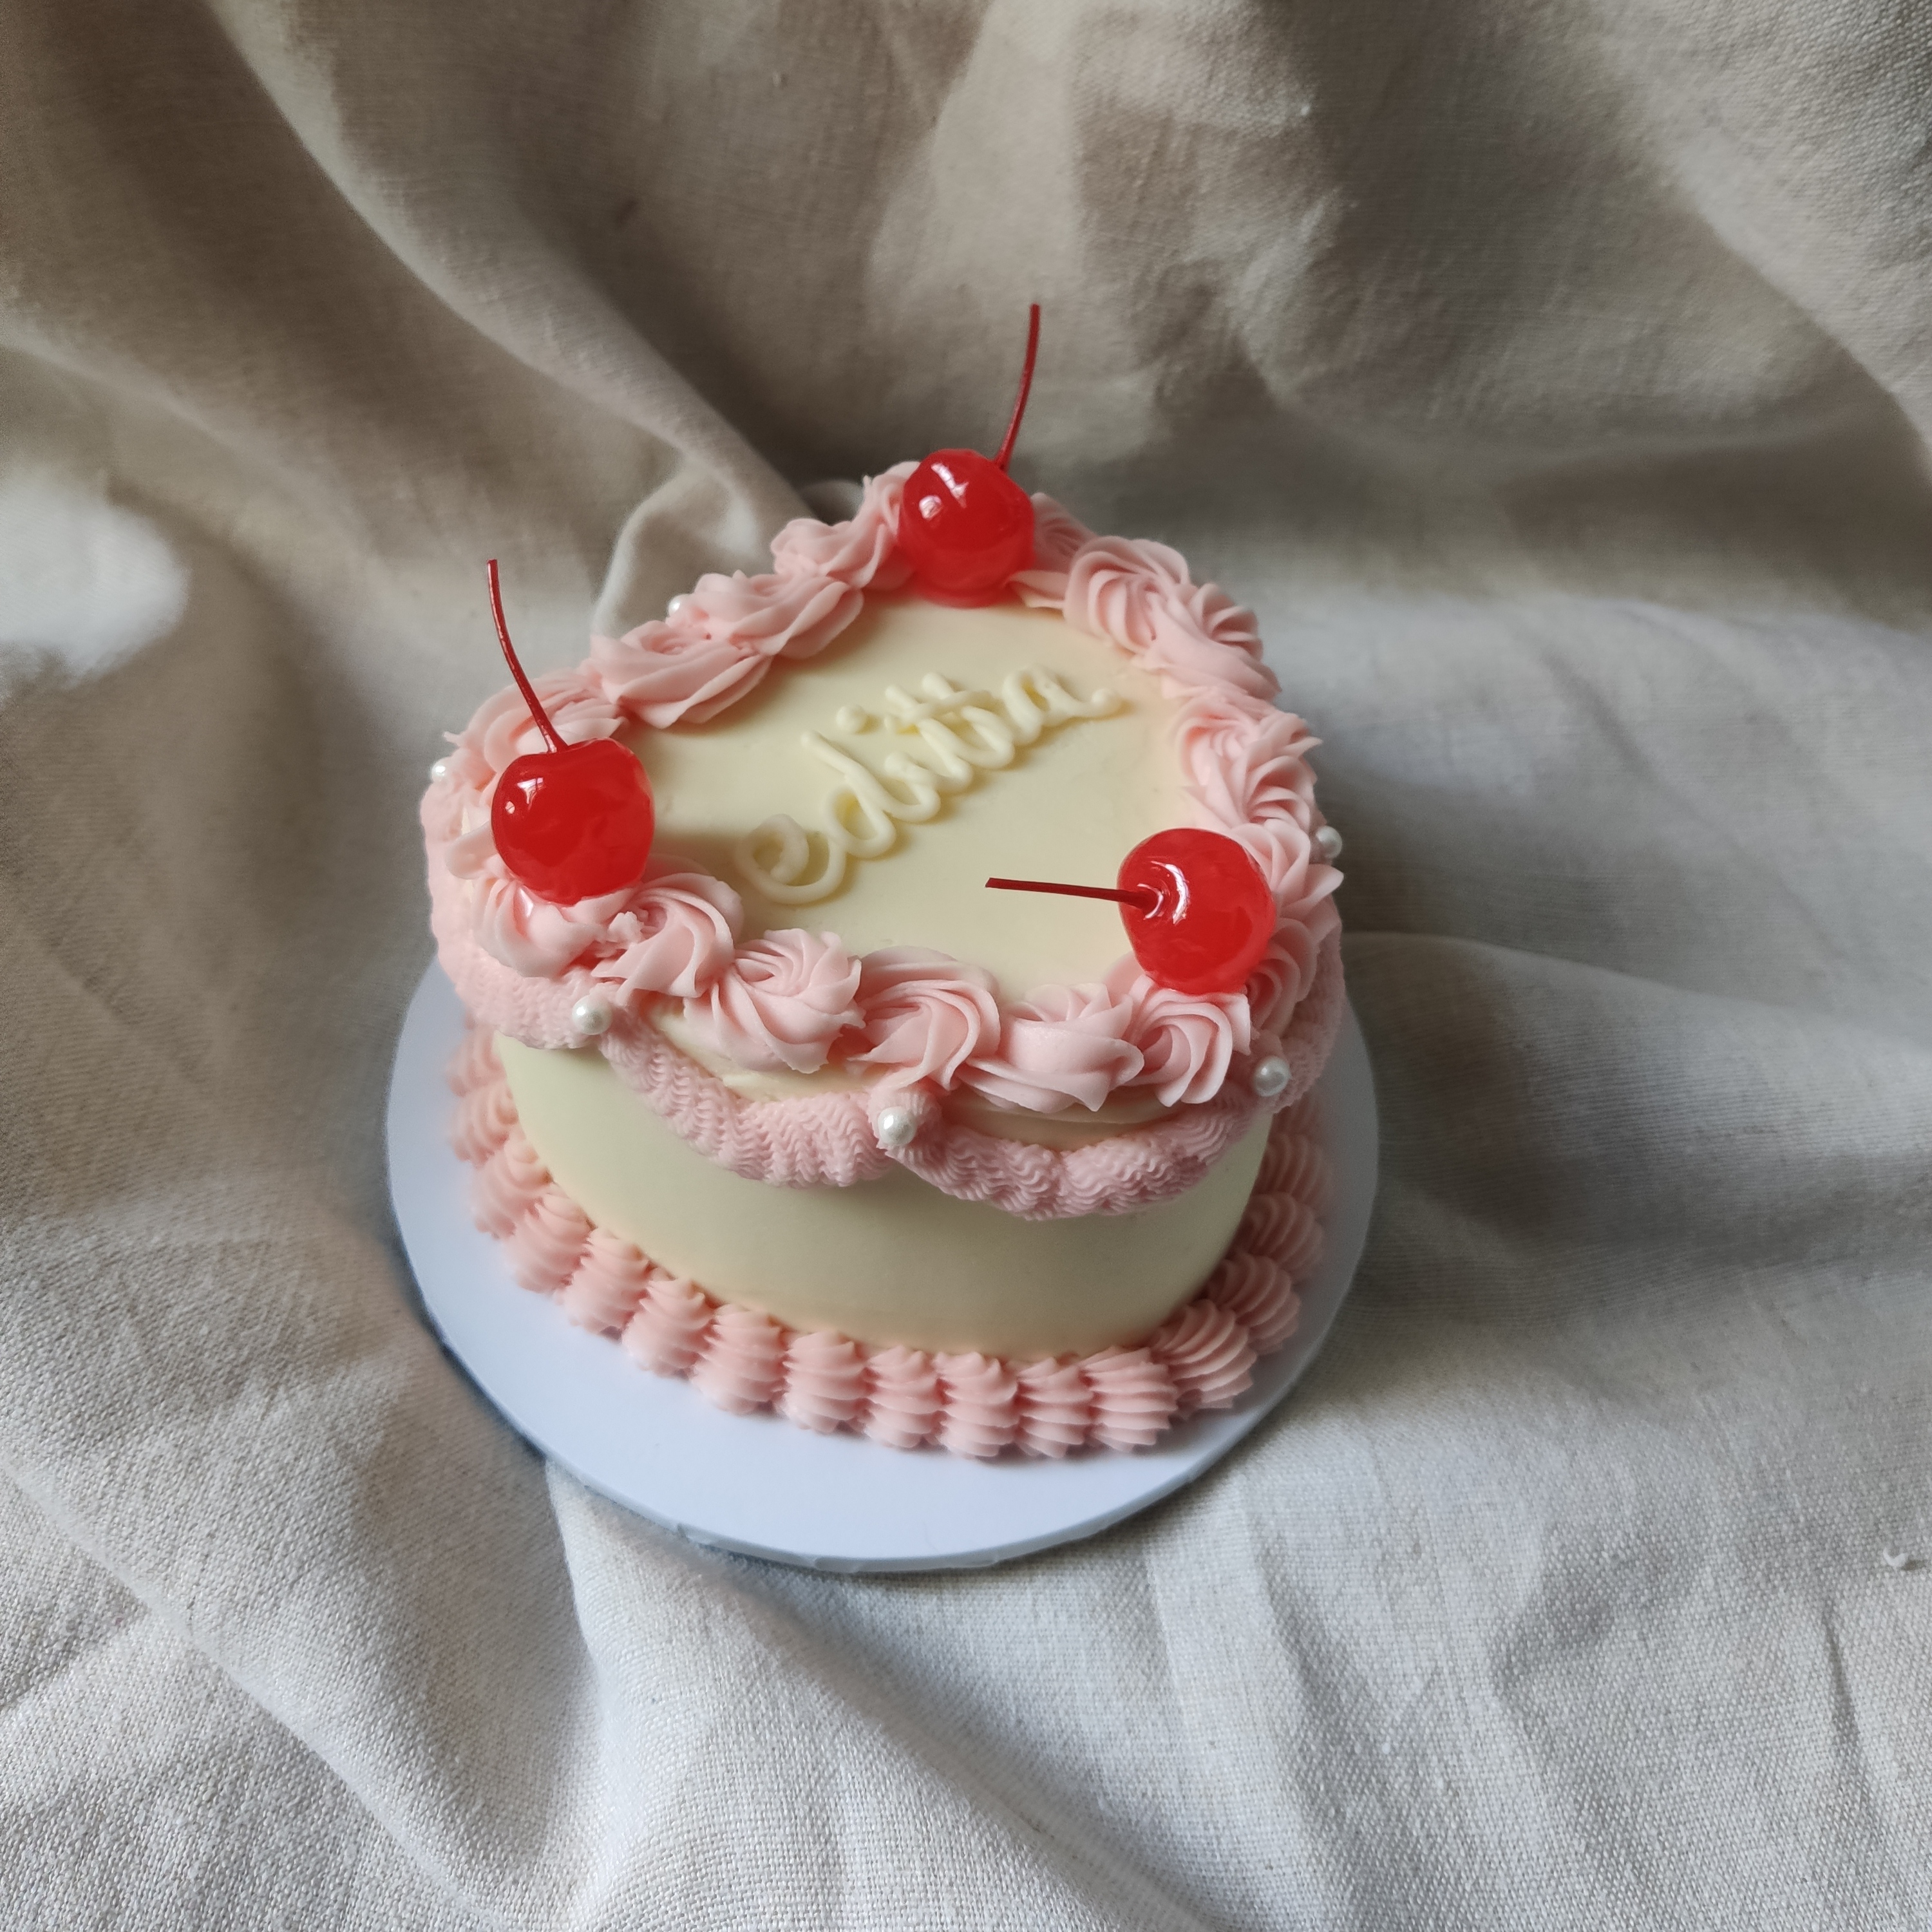 Celebration Cakes | Joelle Jacobs Baked Treats